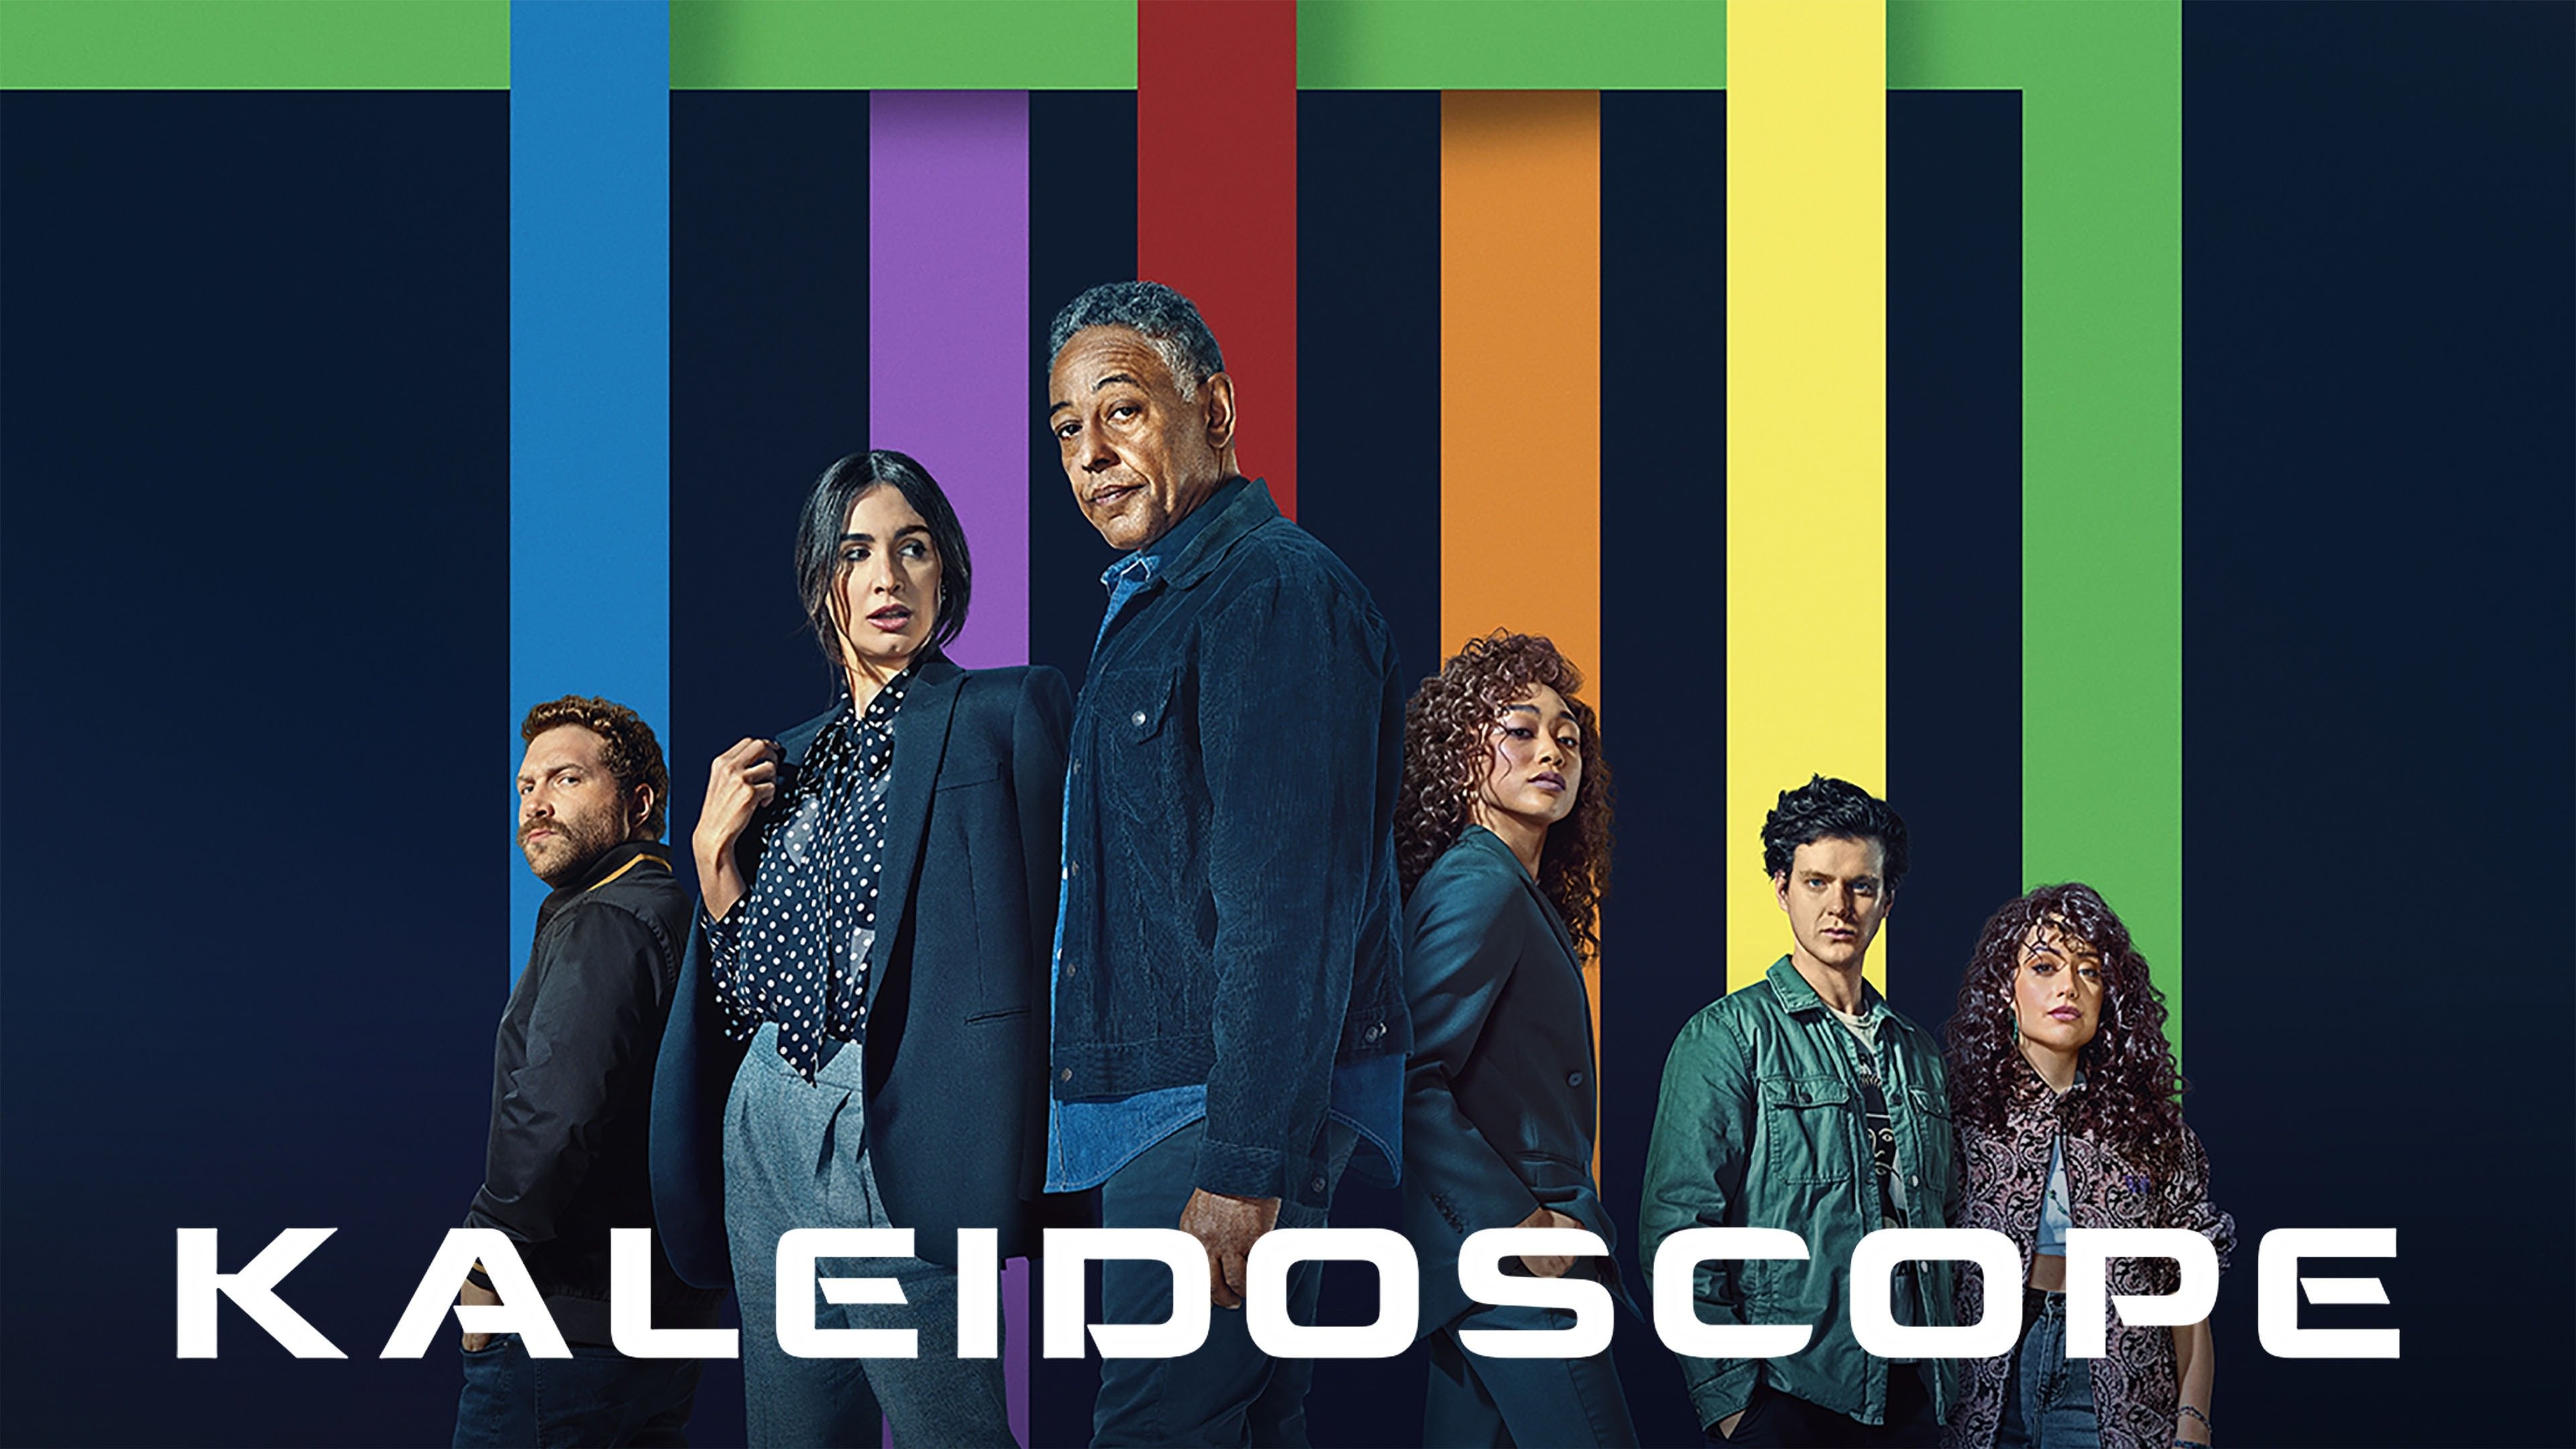 Kaleidoscope (American TV series) - Wikipedia